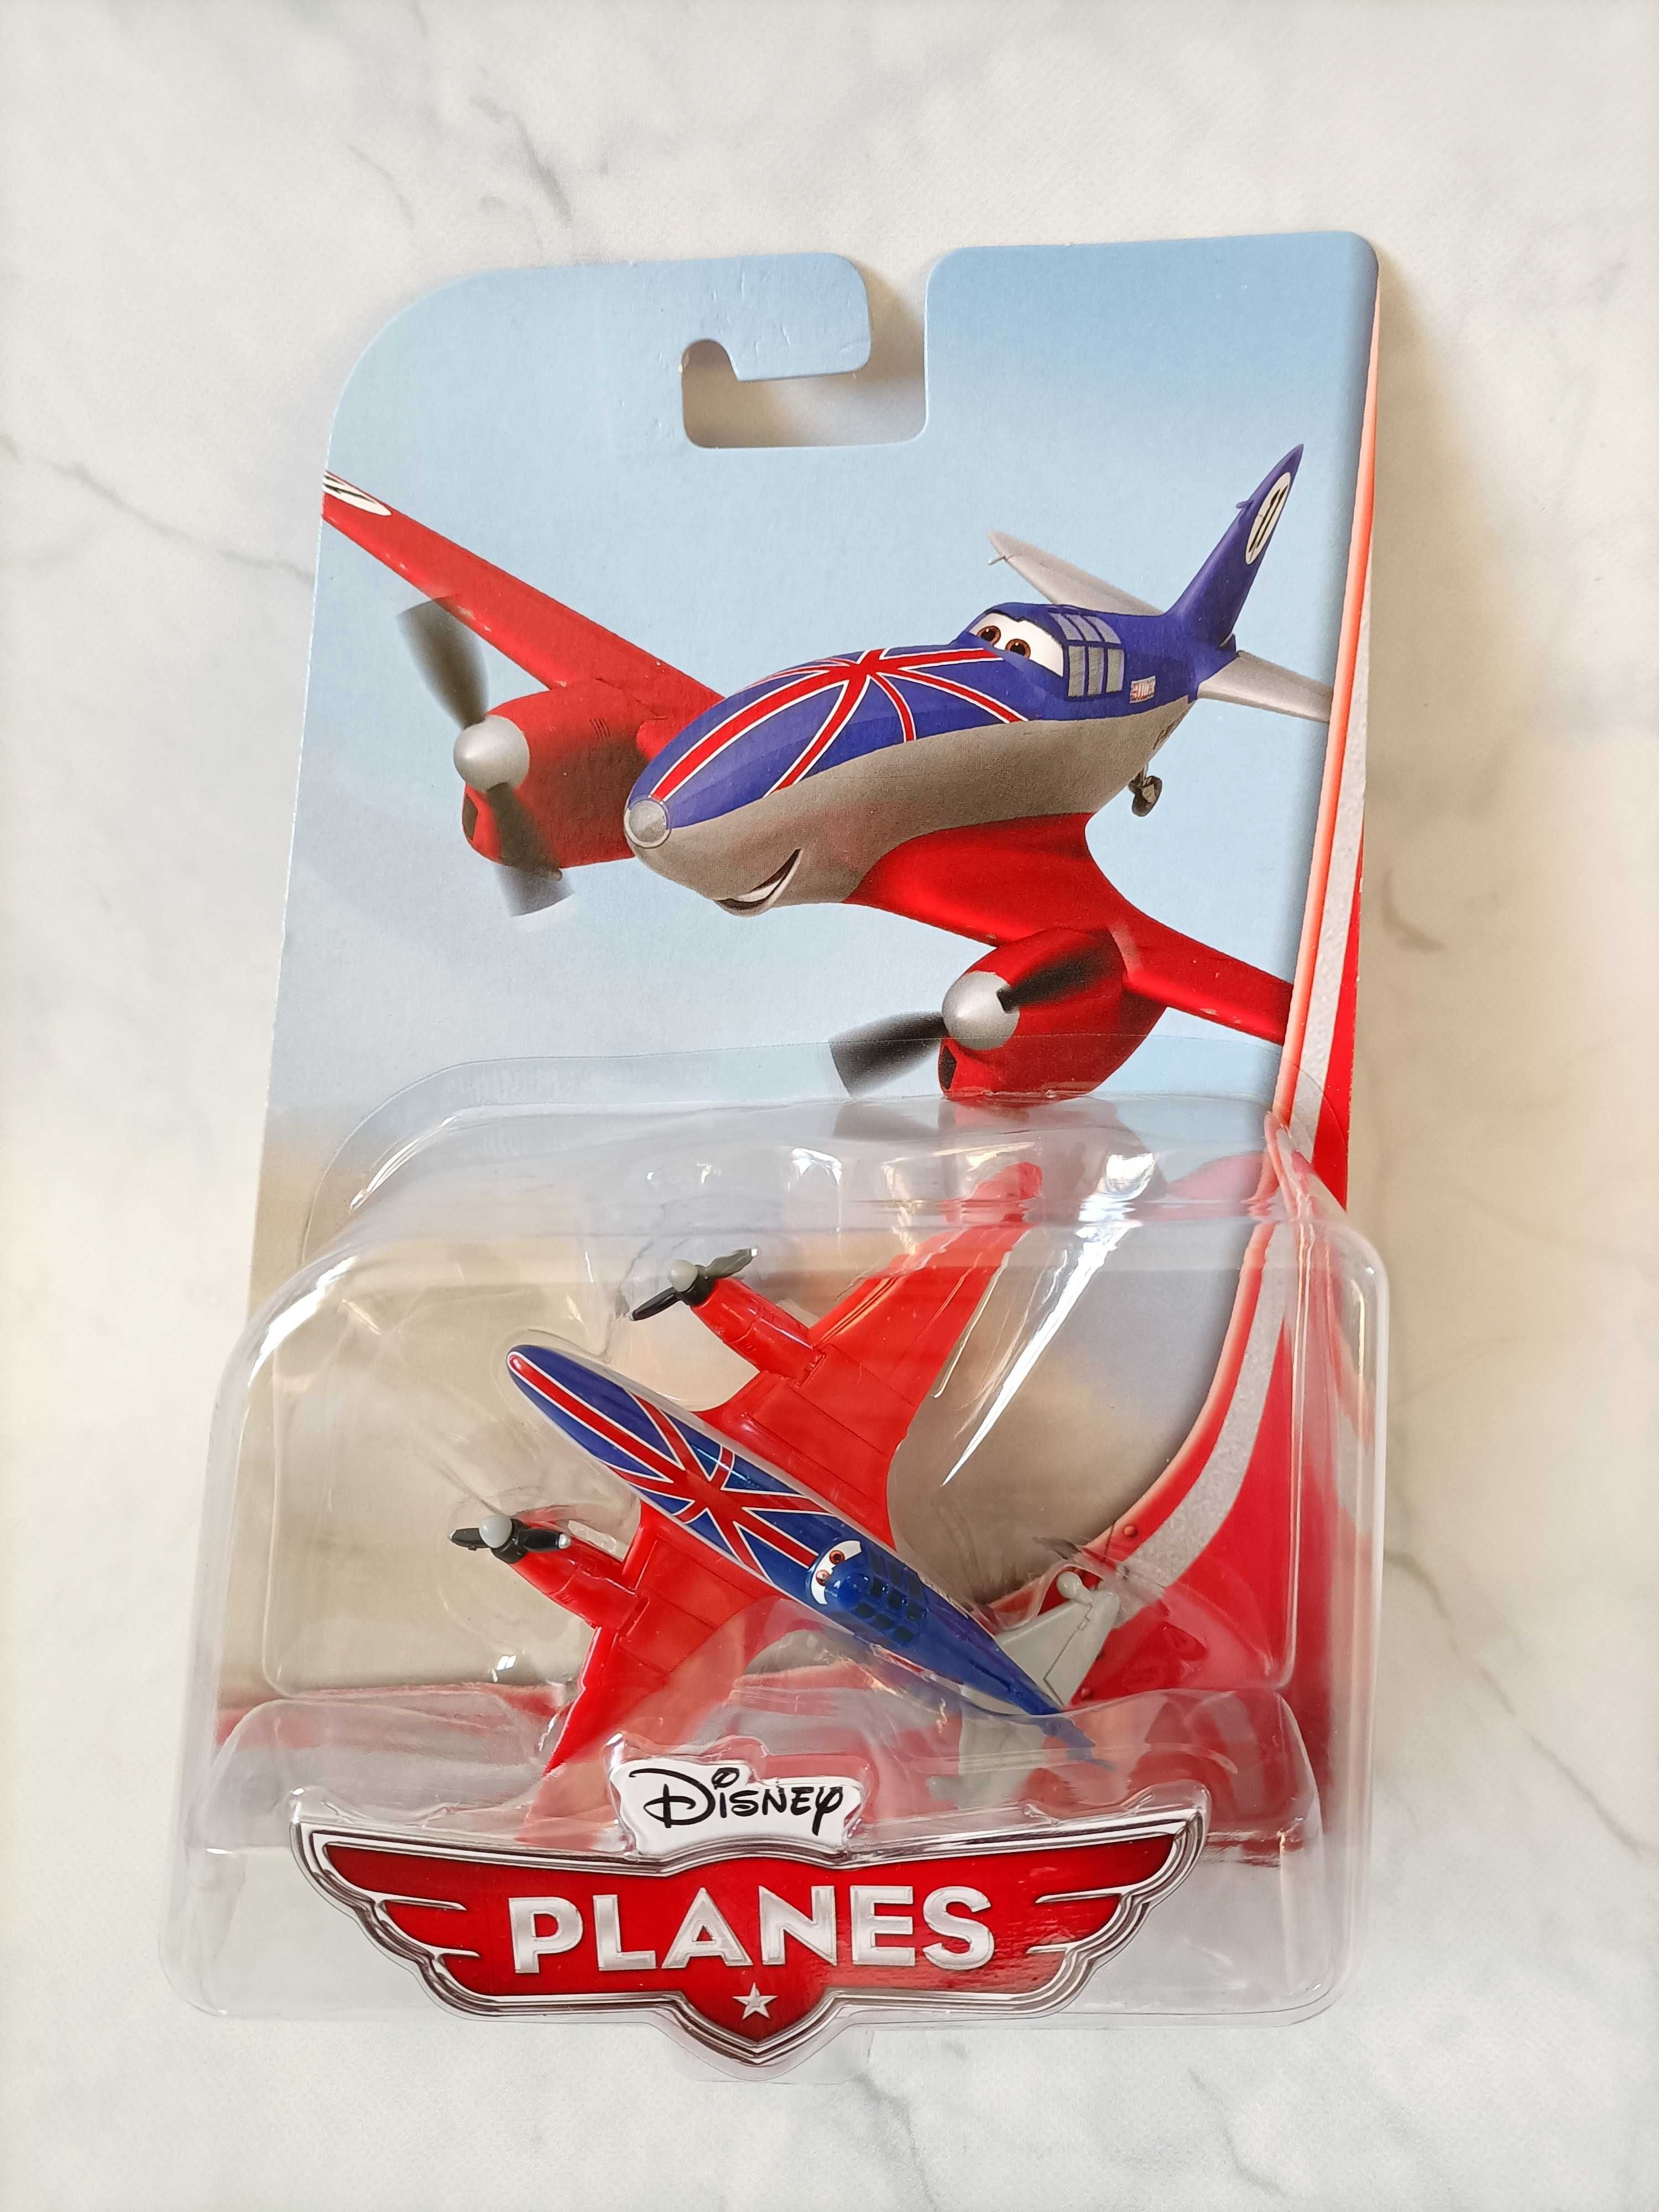 Disney Planes Samolot Bulldog zabawka figurka